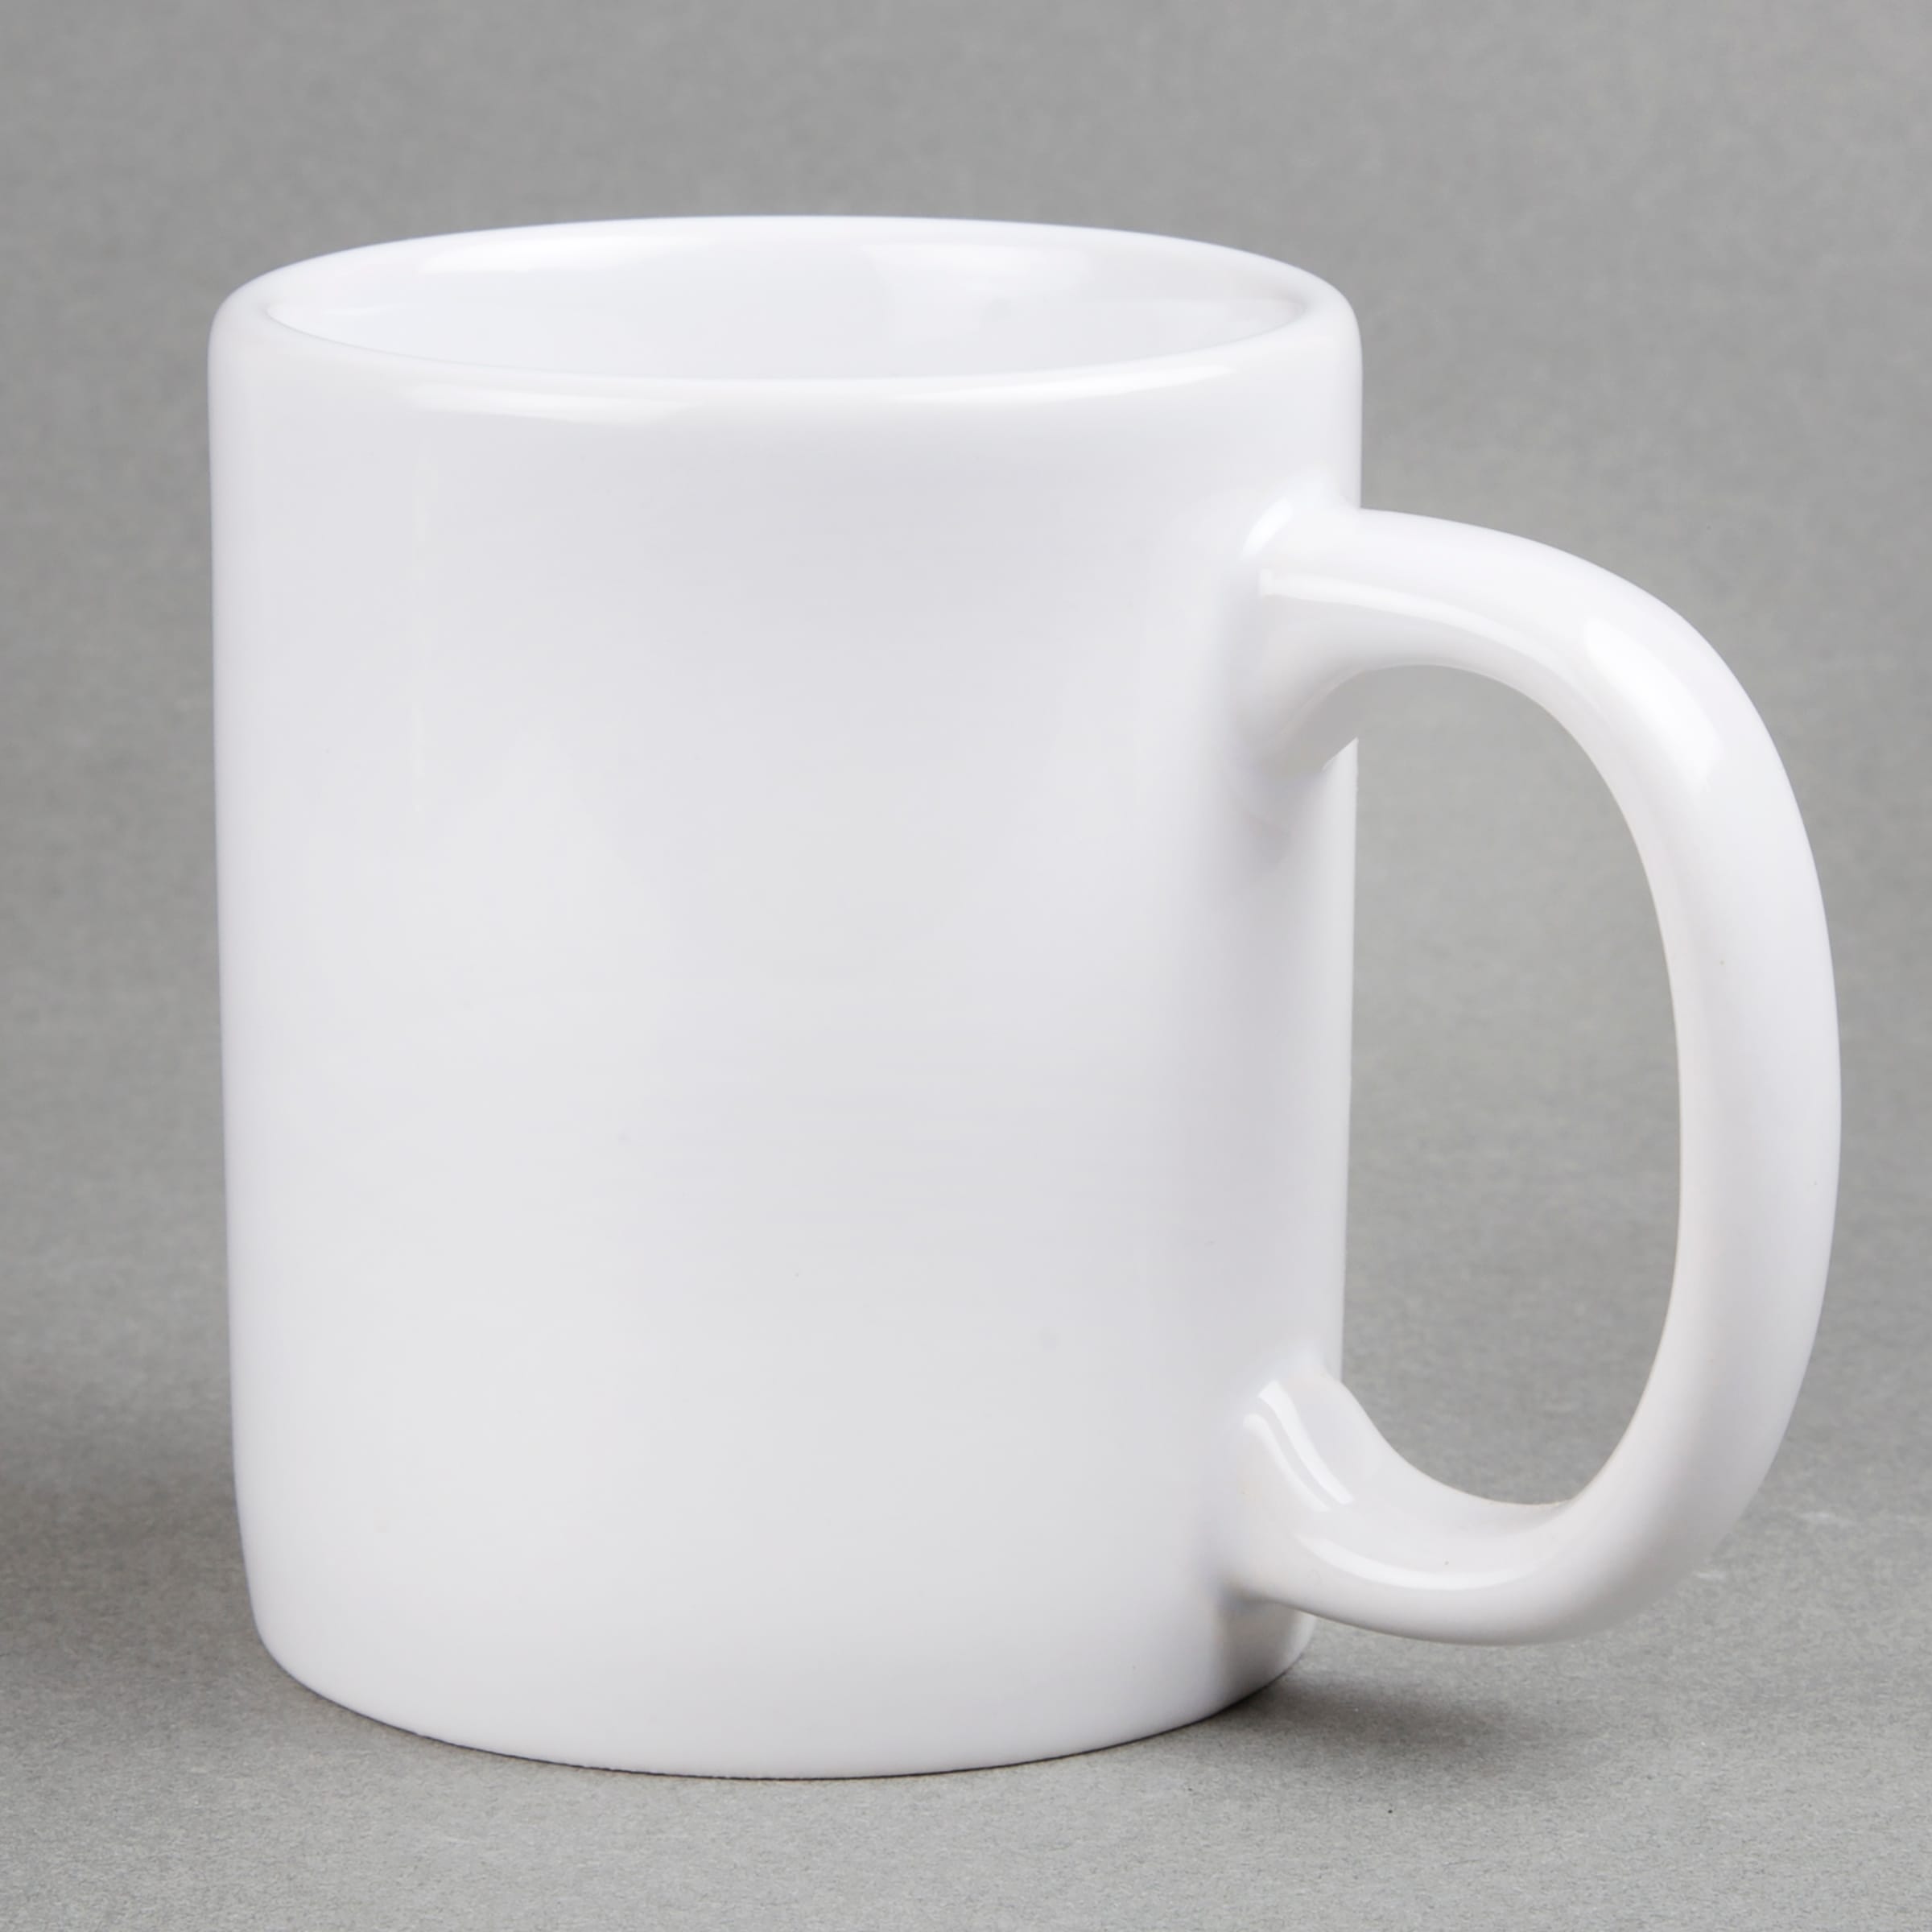 https://ak1.ostkcdn.com/images/products/is/images/direct/81b90c45ada06f339cc32b83713736f100178005/Creative-Home-Set-of-6-Pieces-Ceramic-Stoneware-Coffee-Mug-Tea-Cup-for-Breakfast-Coffee%2C-Hot-Tea%2C-Morning-Juice%2C-Milk%2C-White.jpg